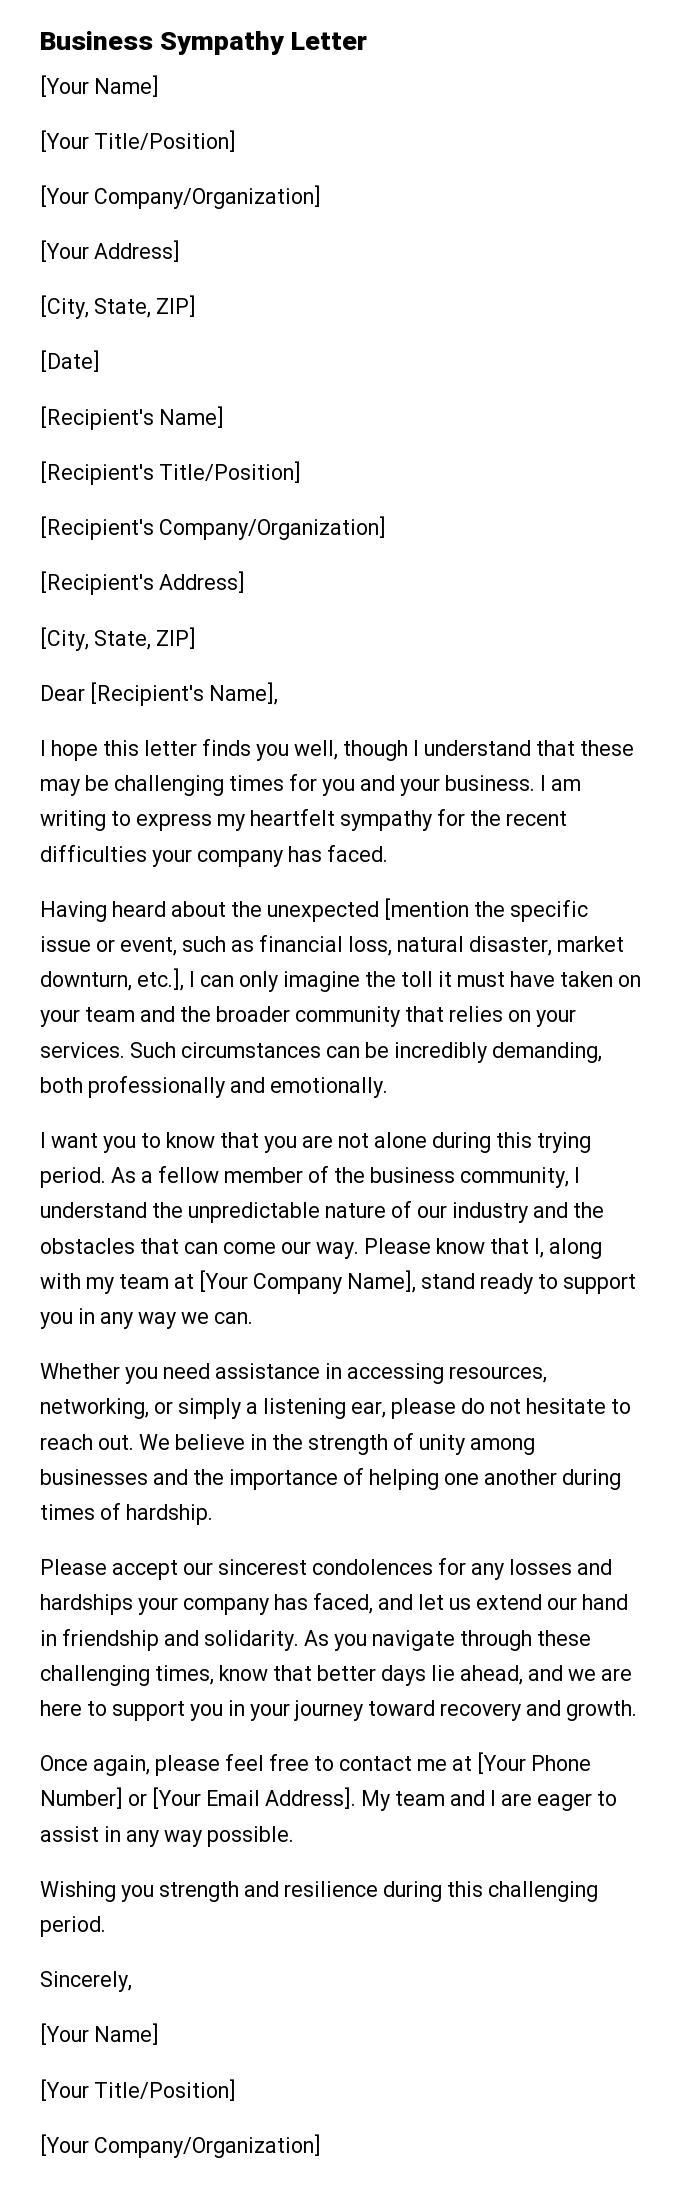 Business Sympathy Letter